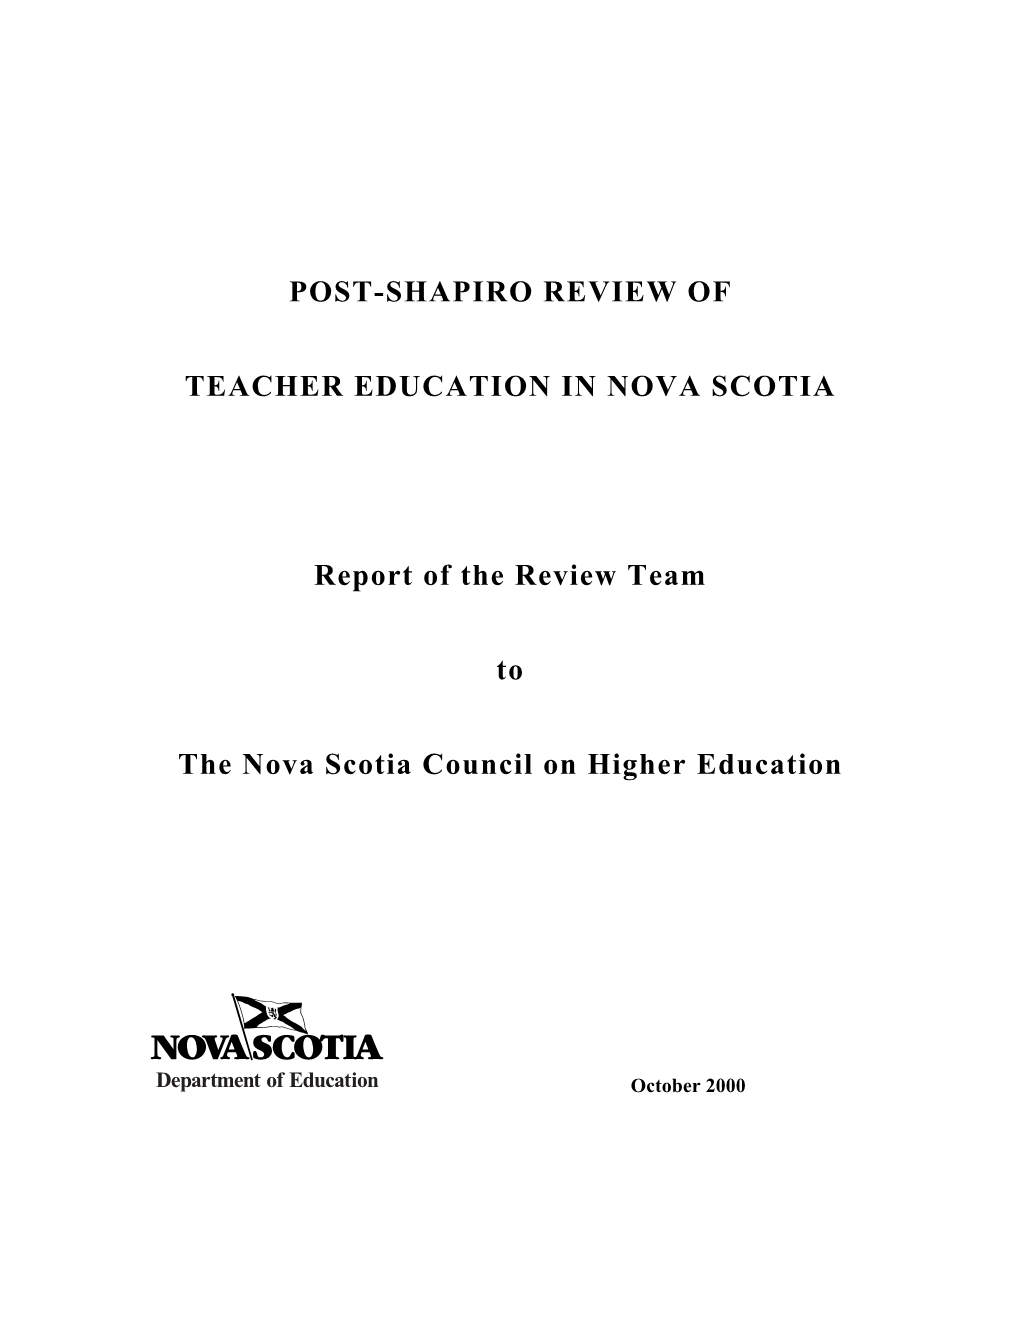 Post-Shapiro Review of Teacher Education in Nova Scotia (2000)